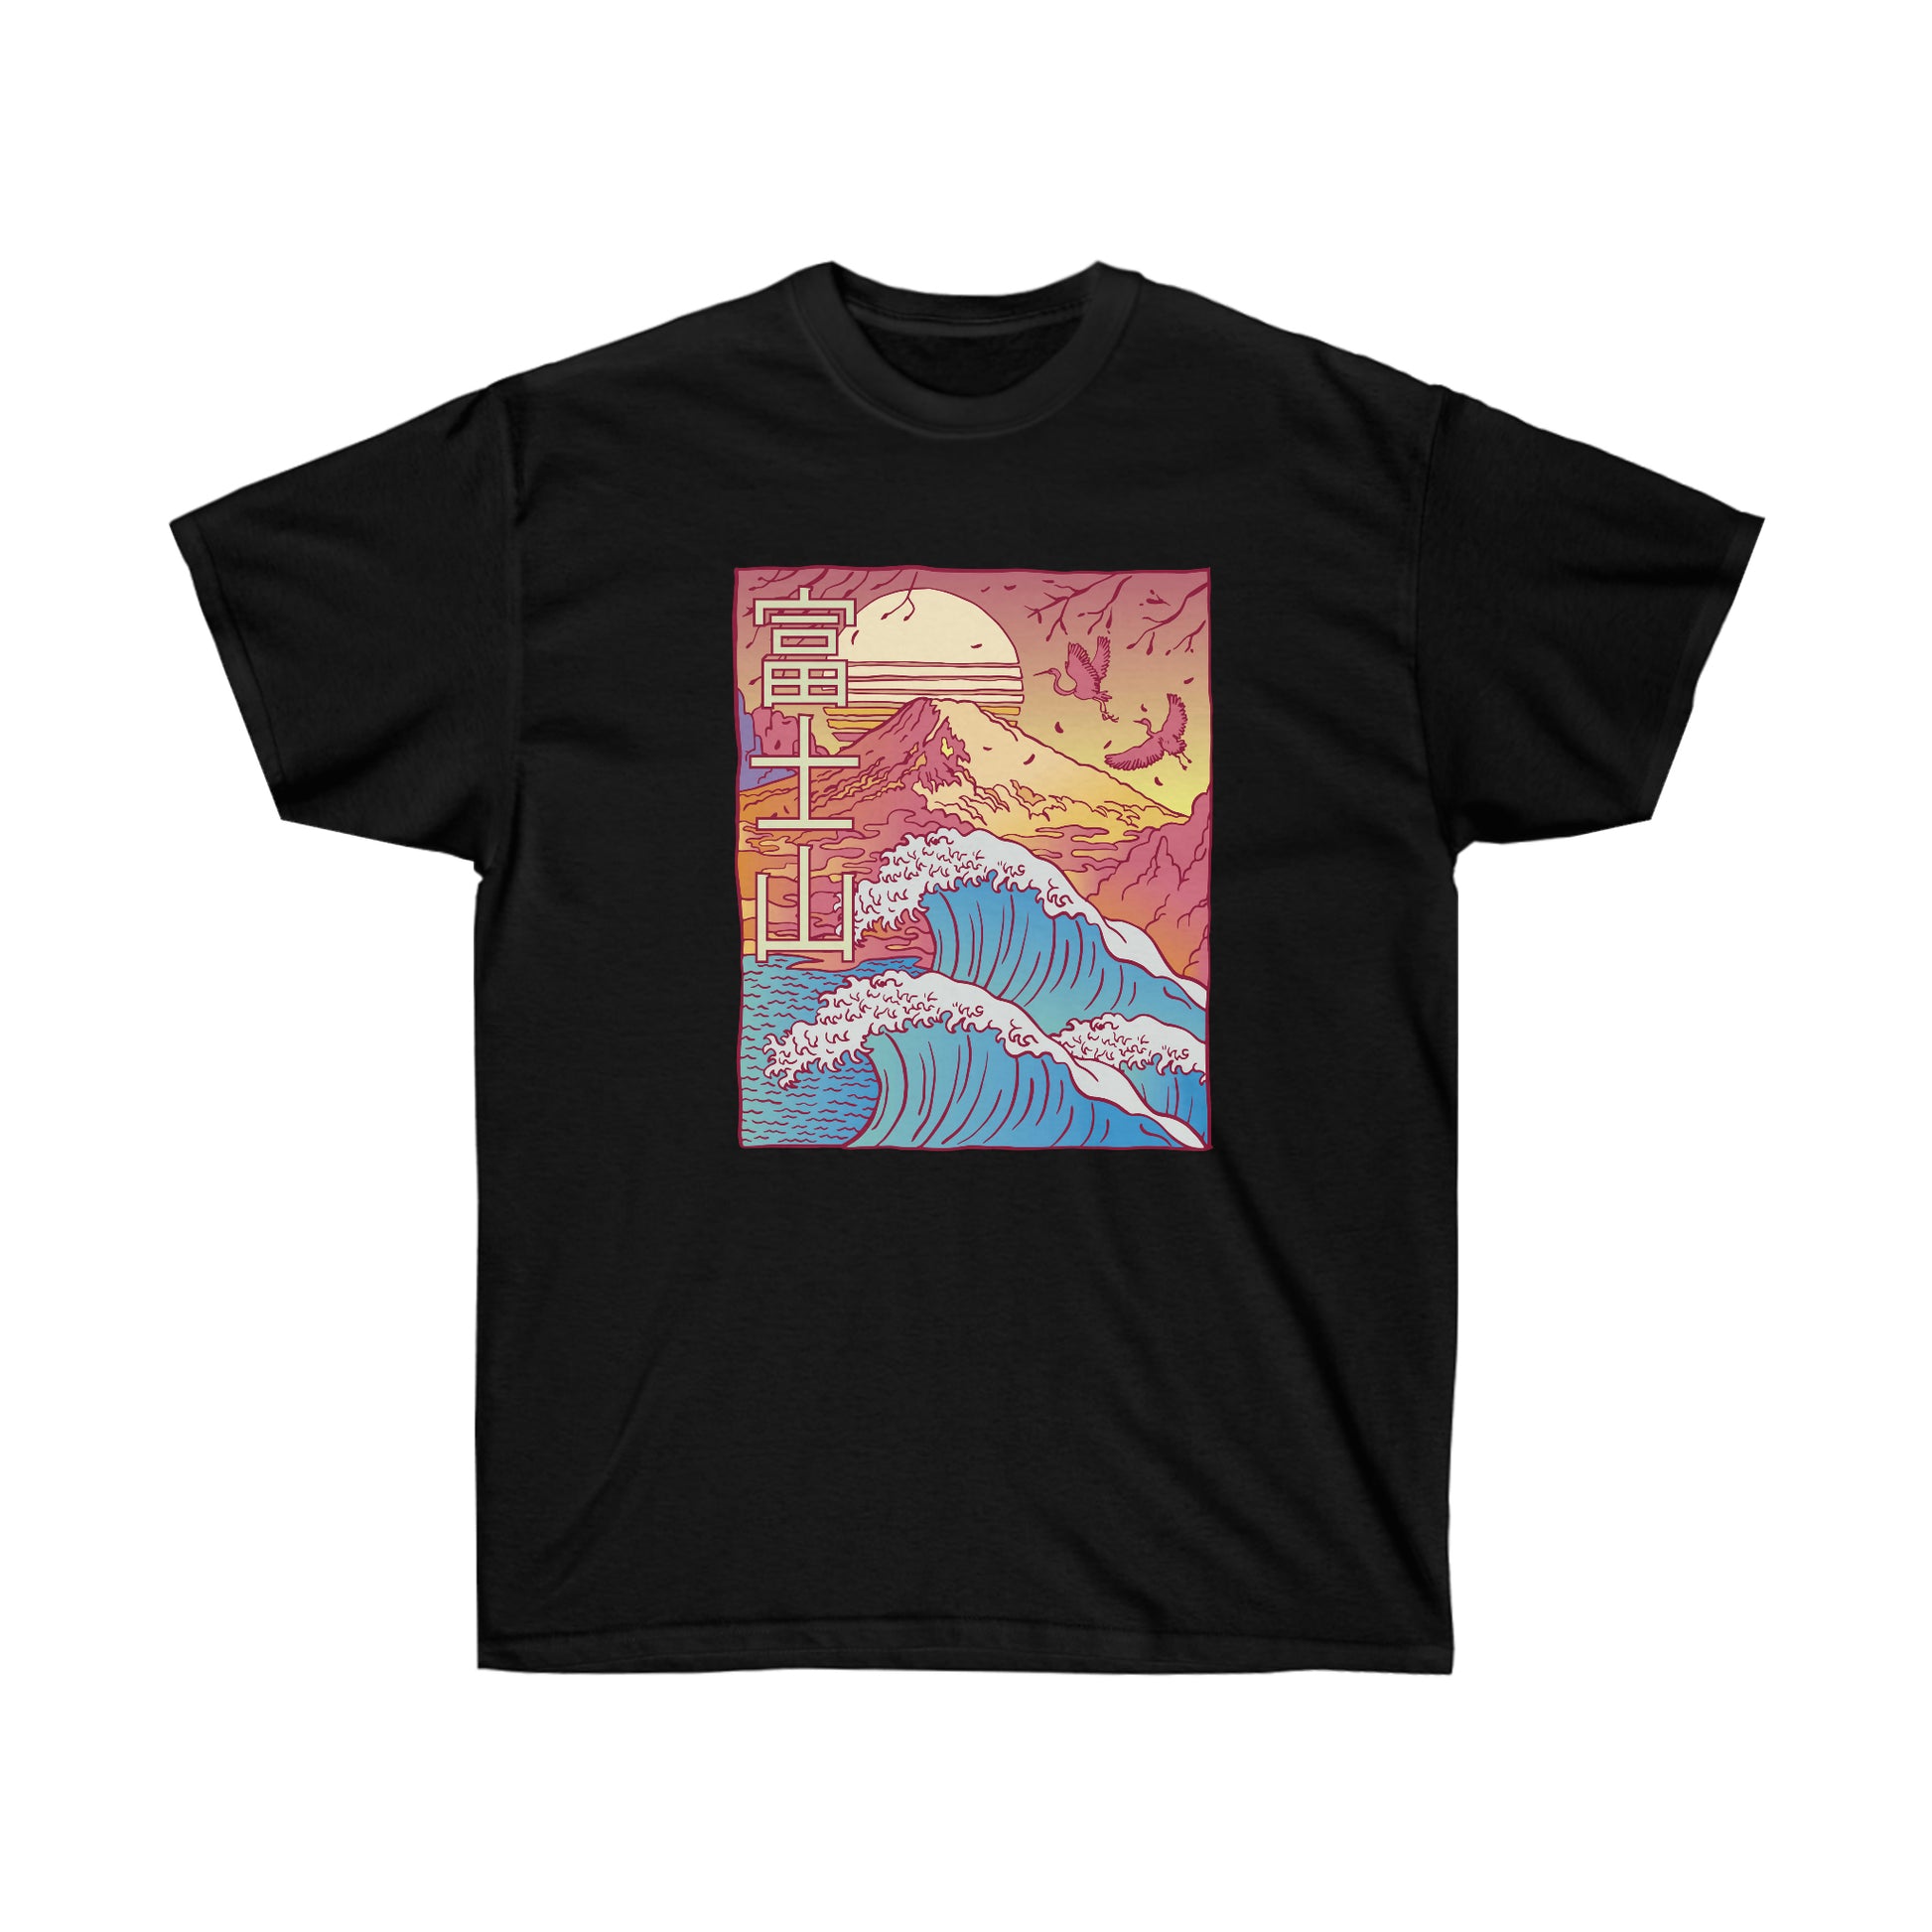 Kawaii Aesthetic Japanese Retro Vaporwave Art T-Shirt